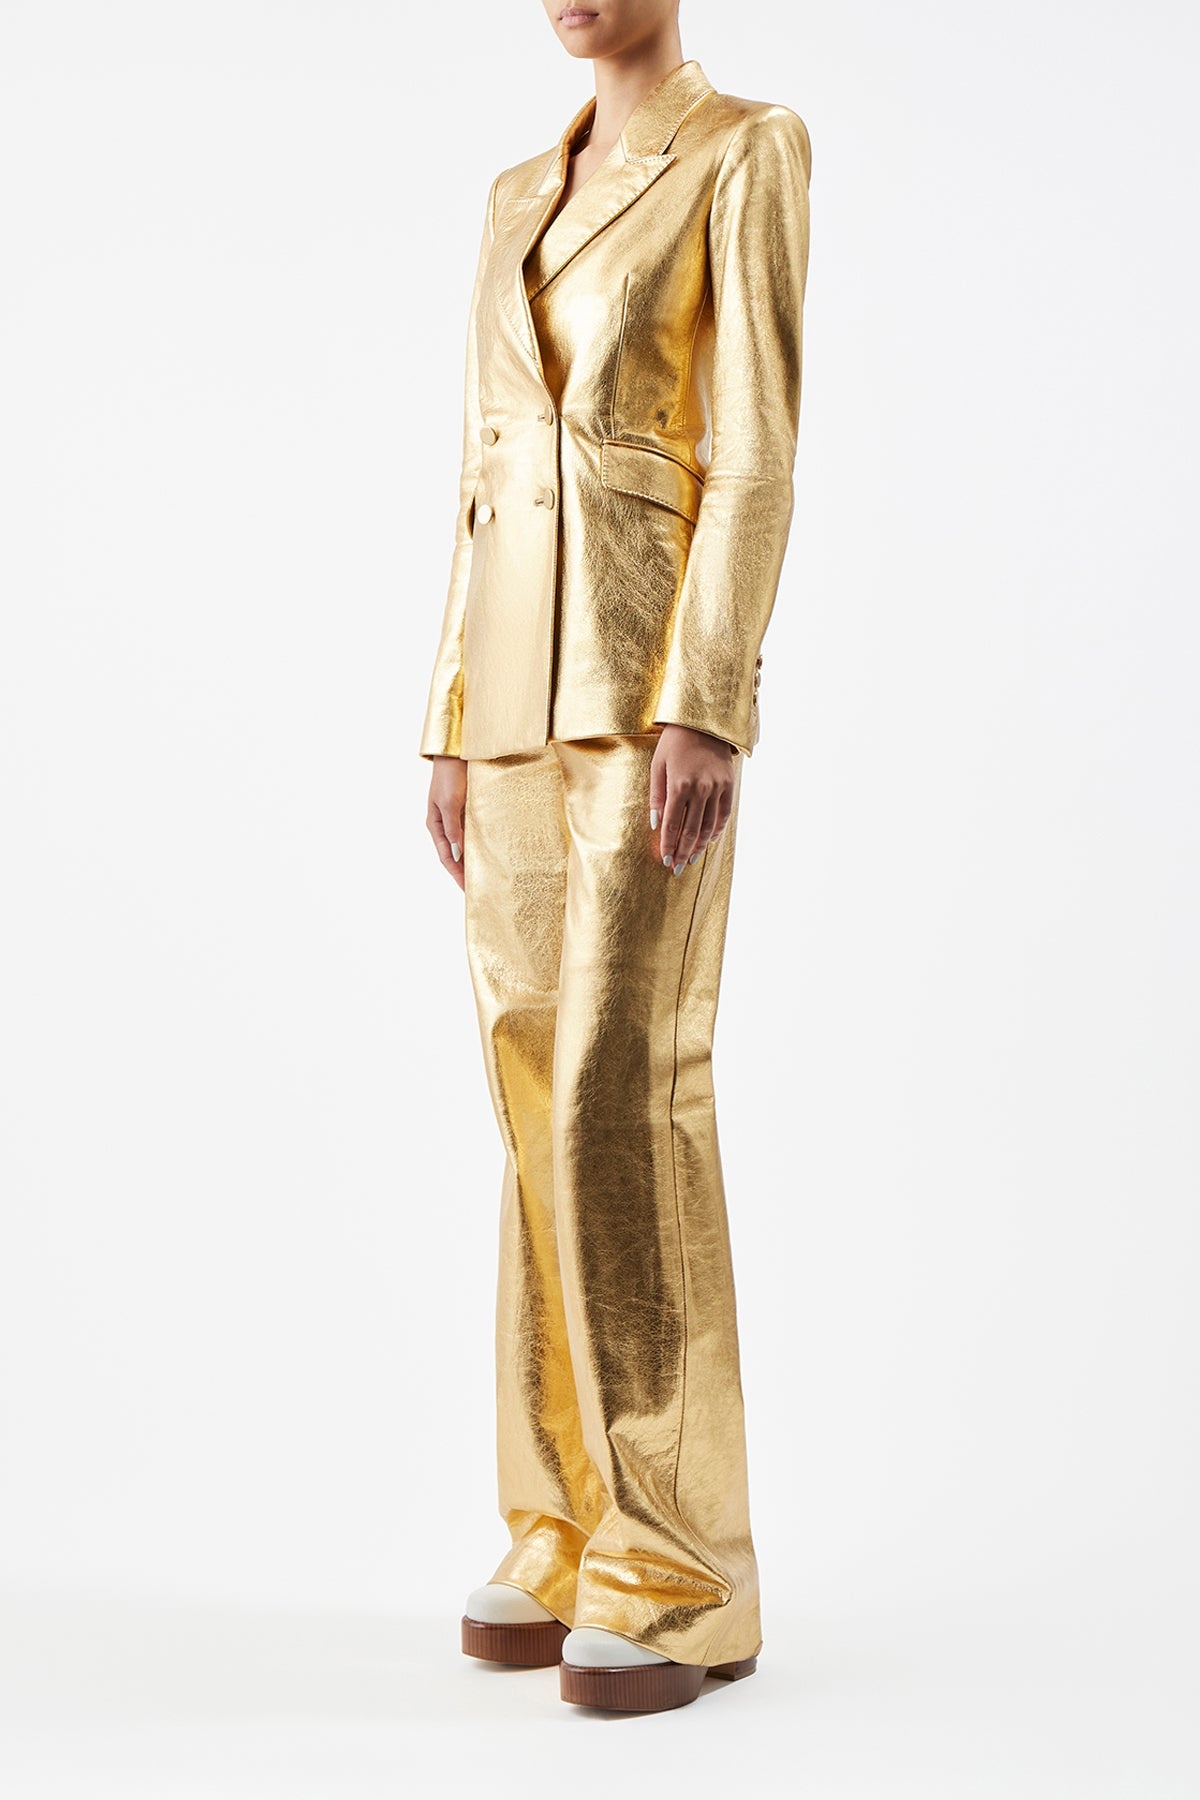 Vesta Pant in Gold Leather - 4